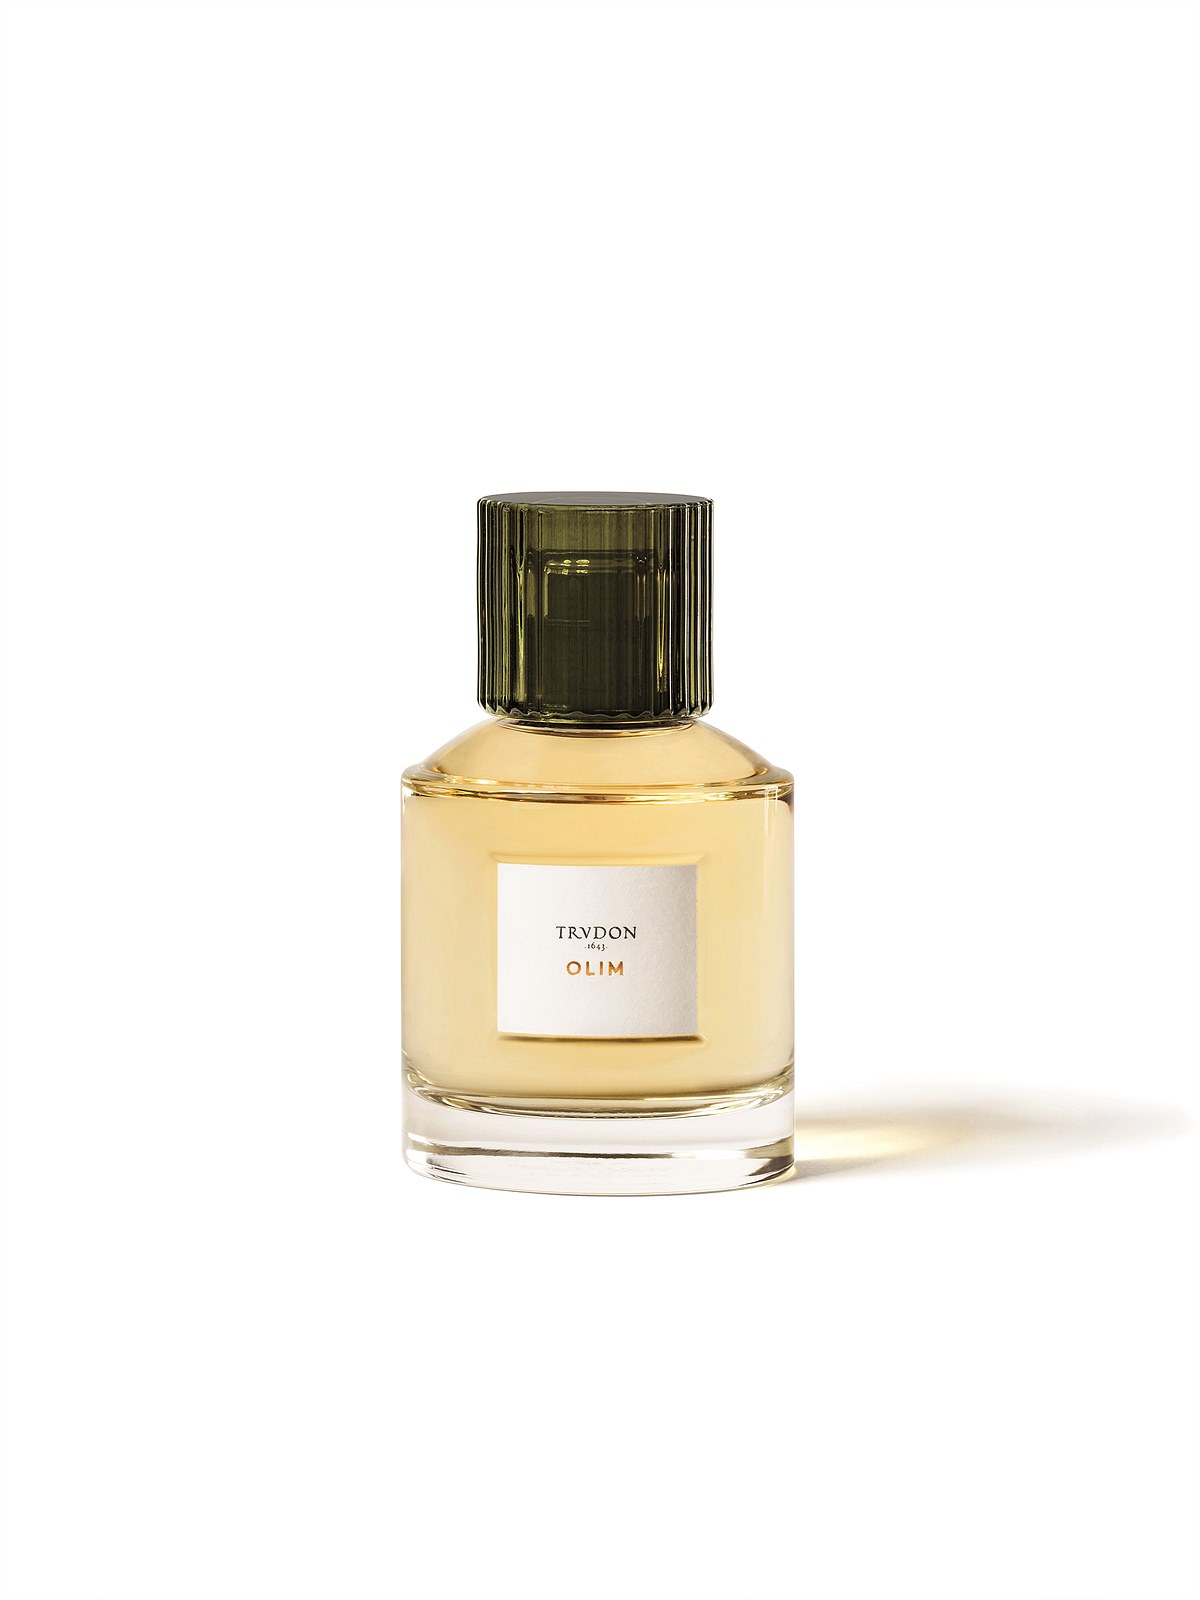 Trudon Parfums -Flacon Olim- 300dpi